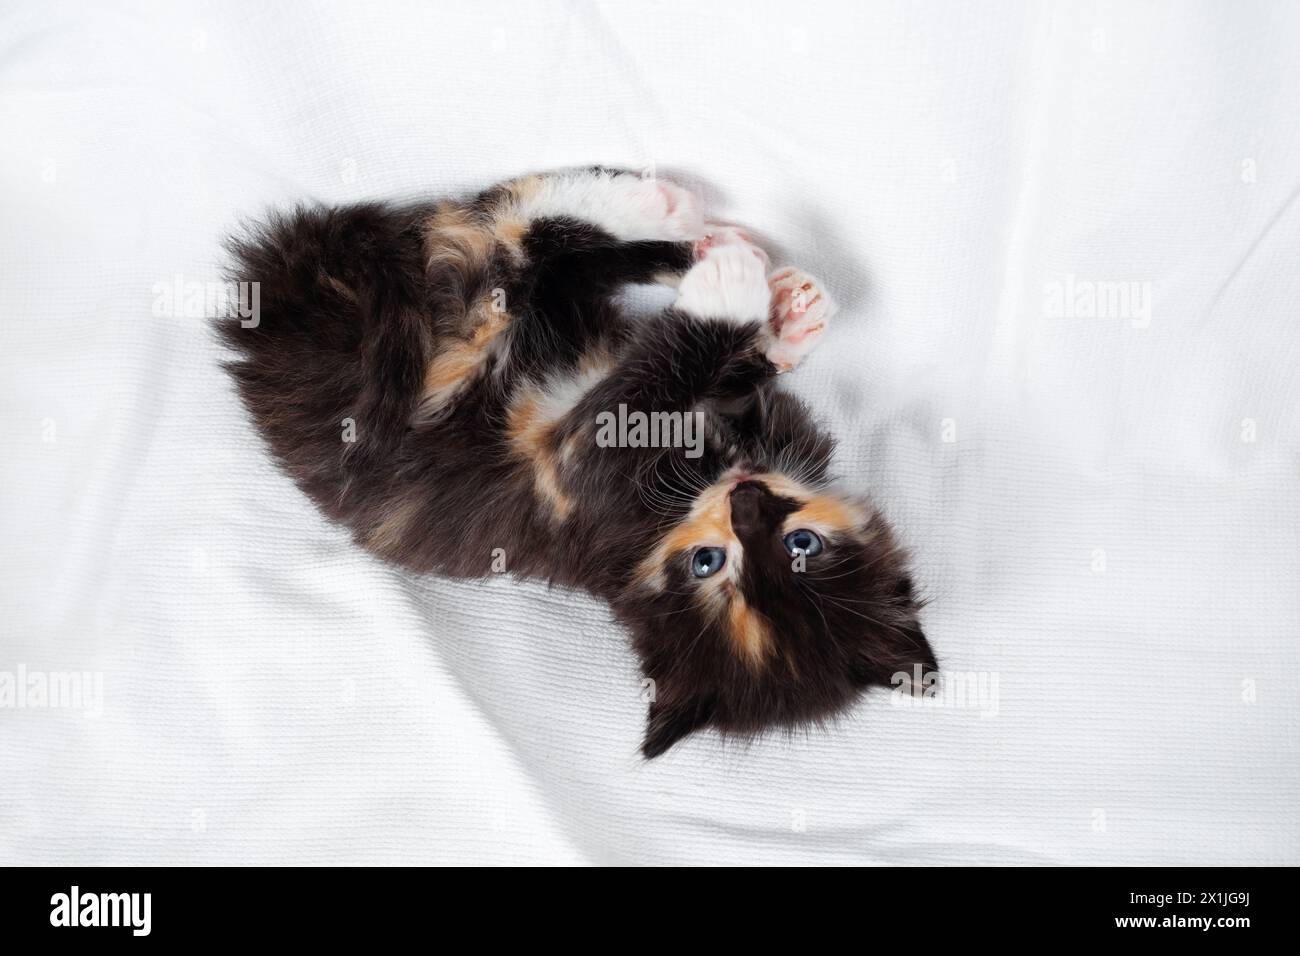 Cute tortoiseshell kitten cat lying on white sheet background. Stock Photo